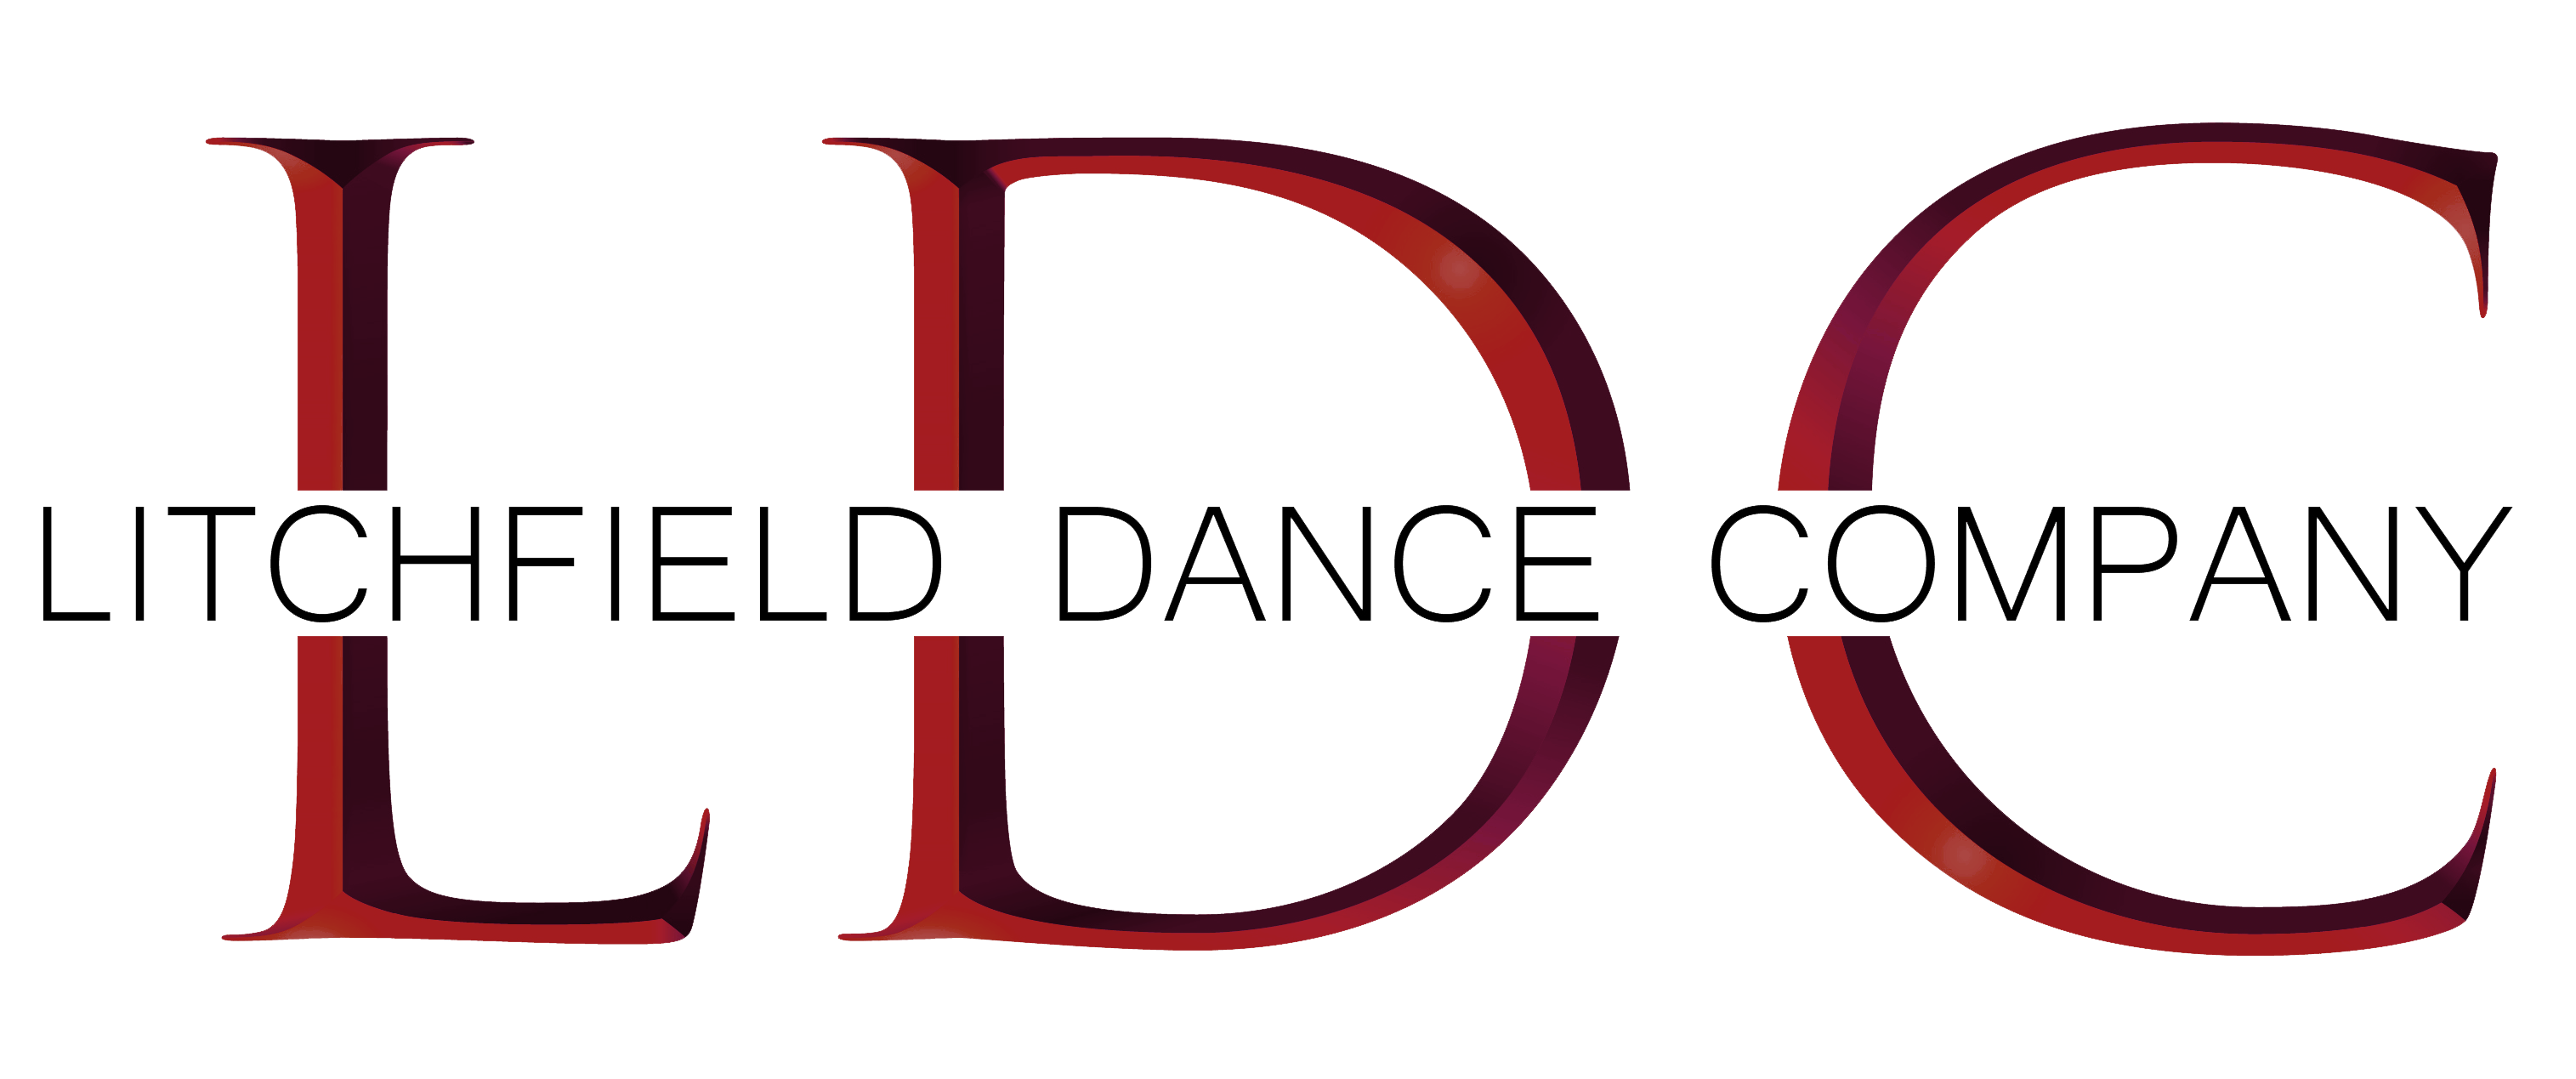 Litchfield Logo - Litchfield Dance Company